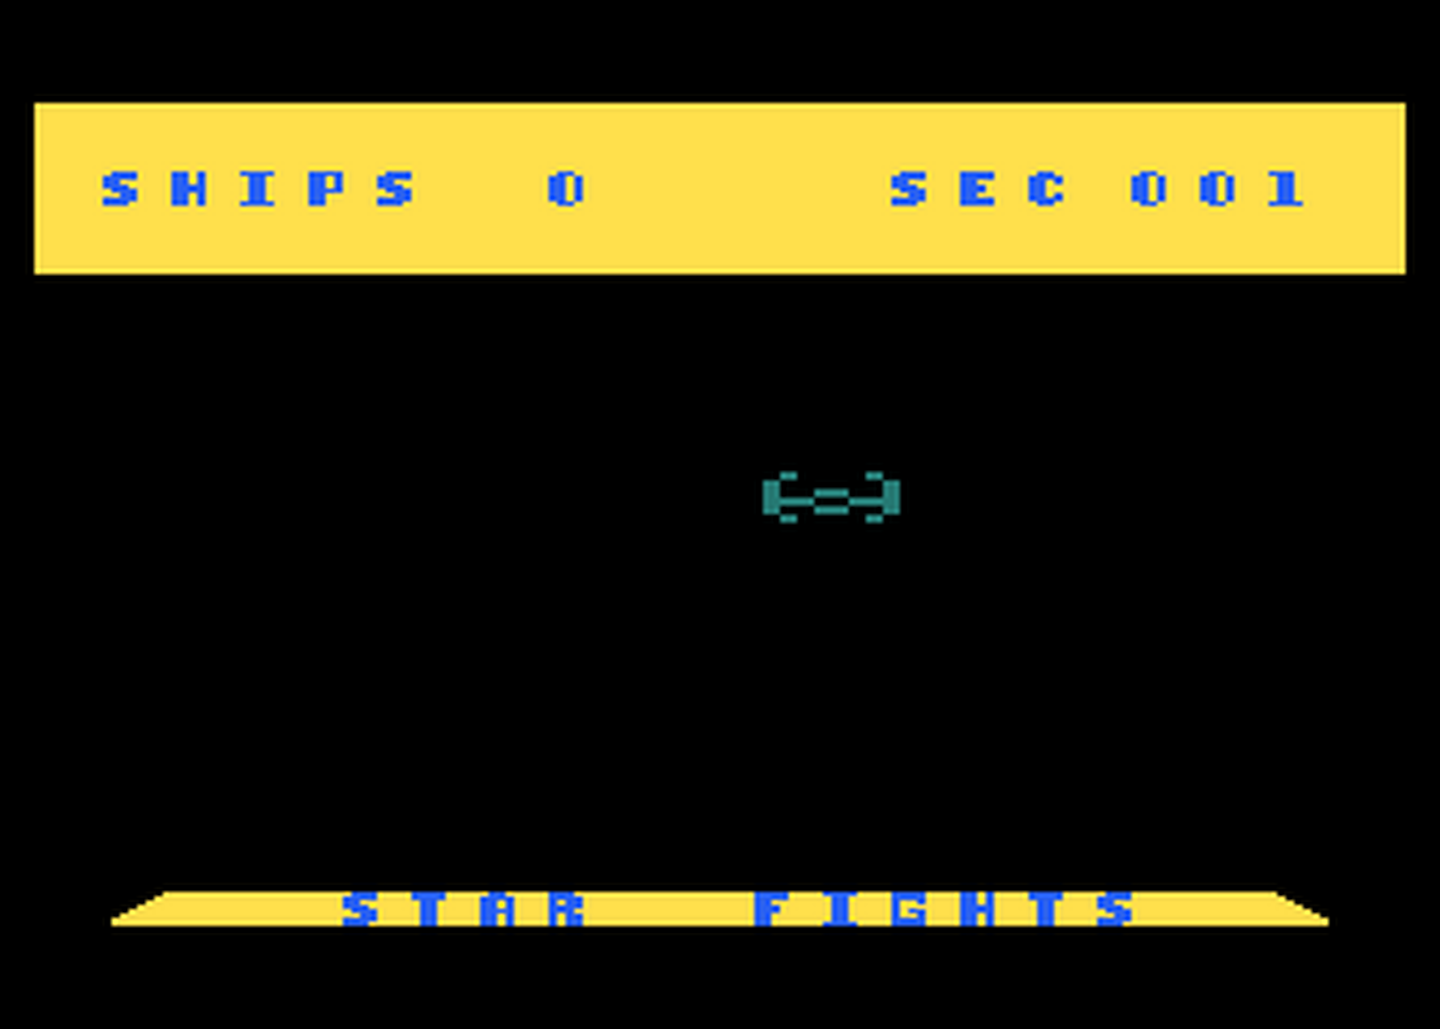 Atari GameBase Star_Fights Cymbal_Software_Inc 1984